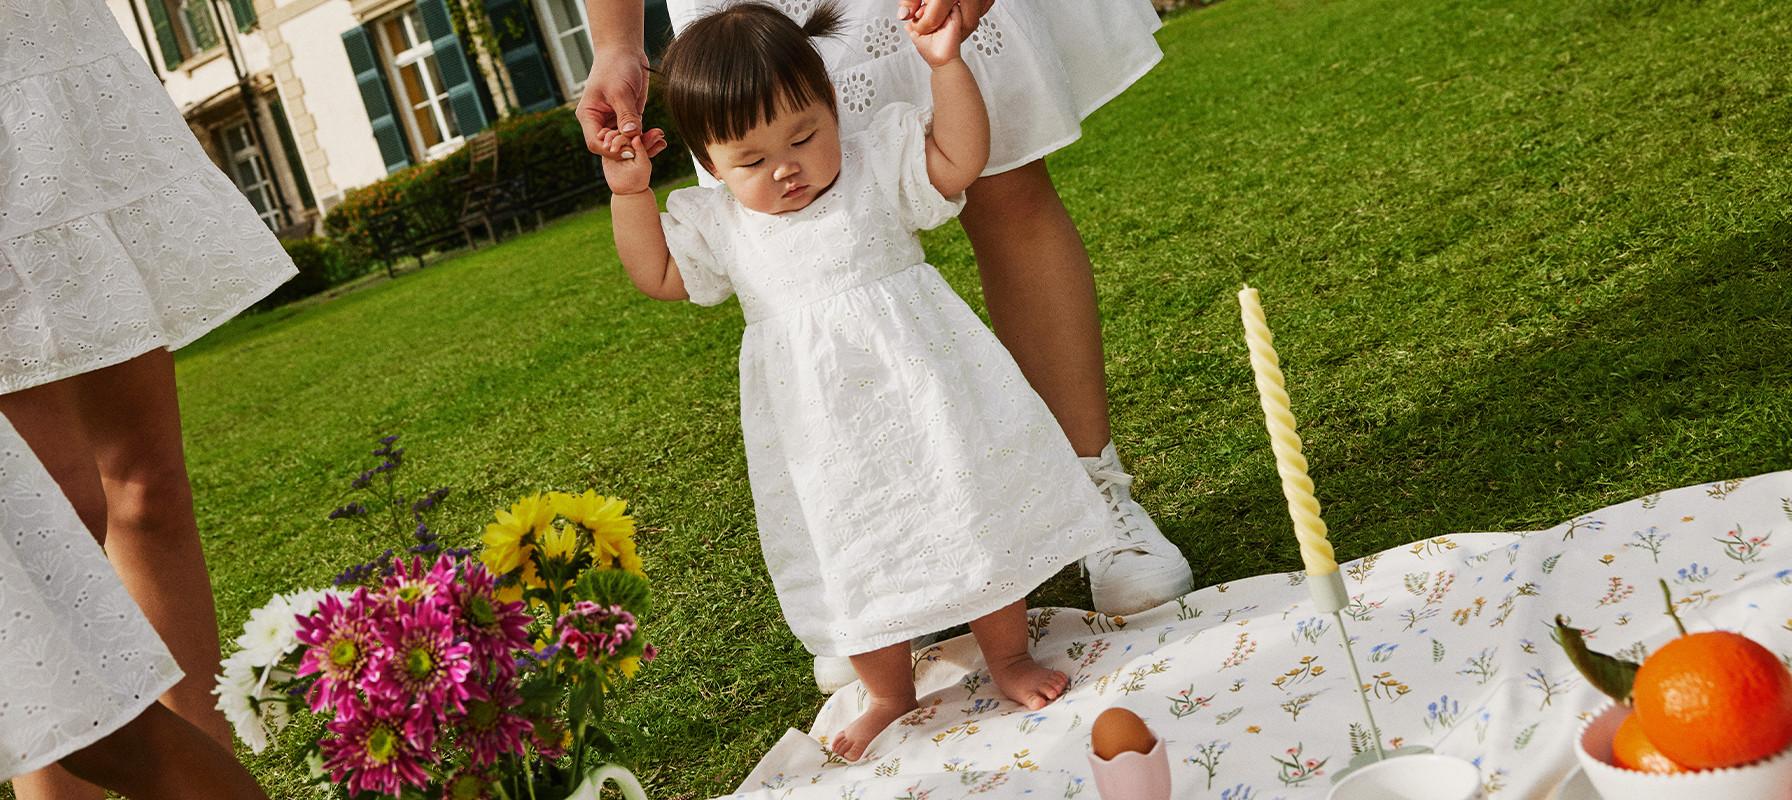 Baby in white dress